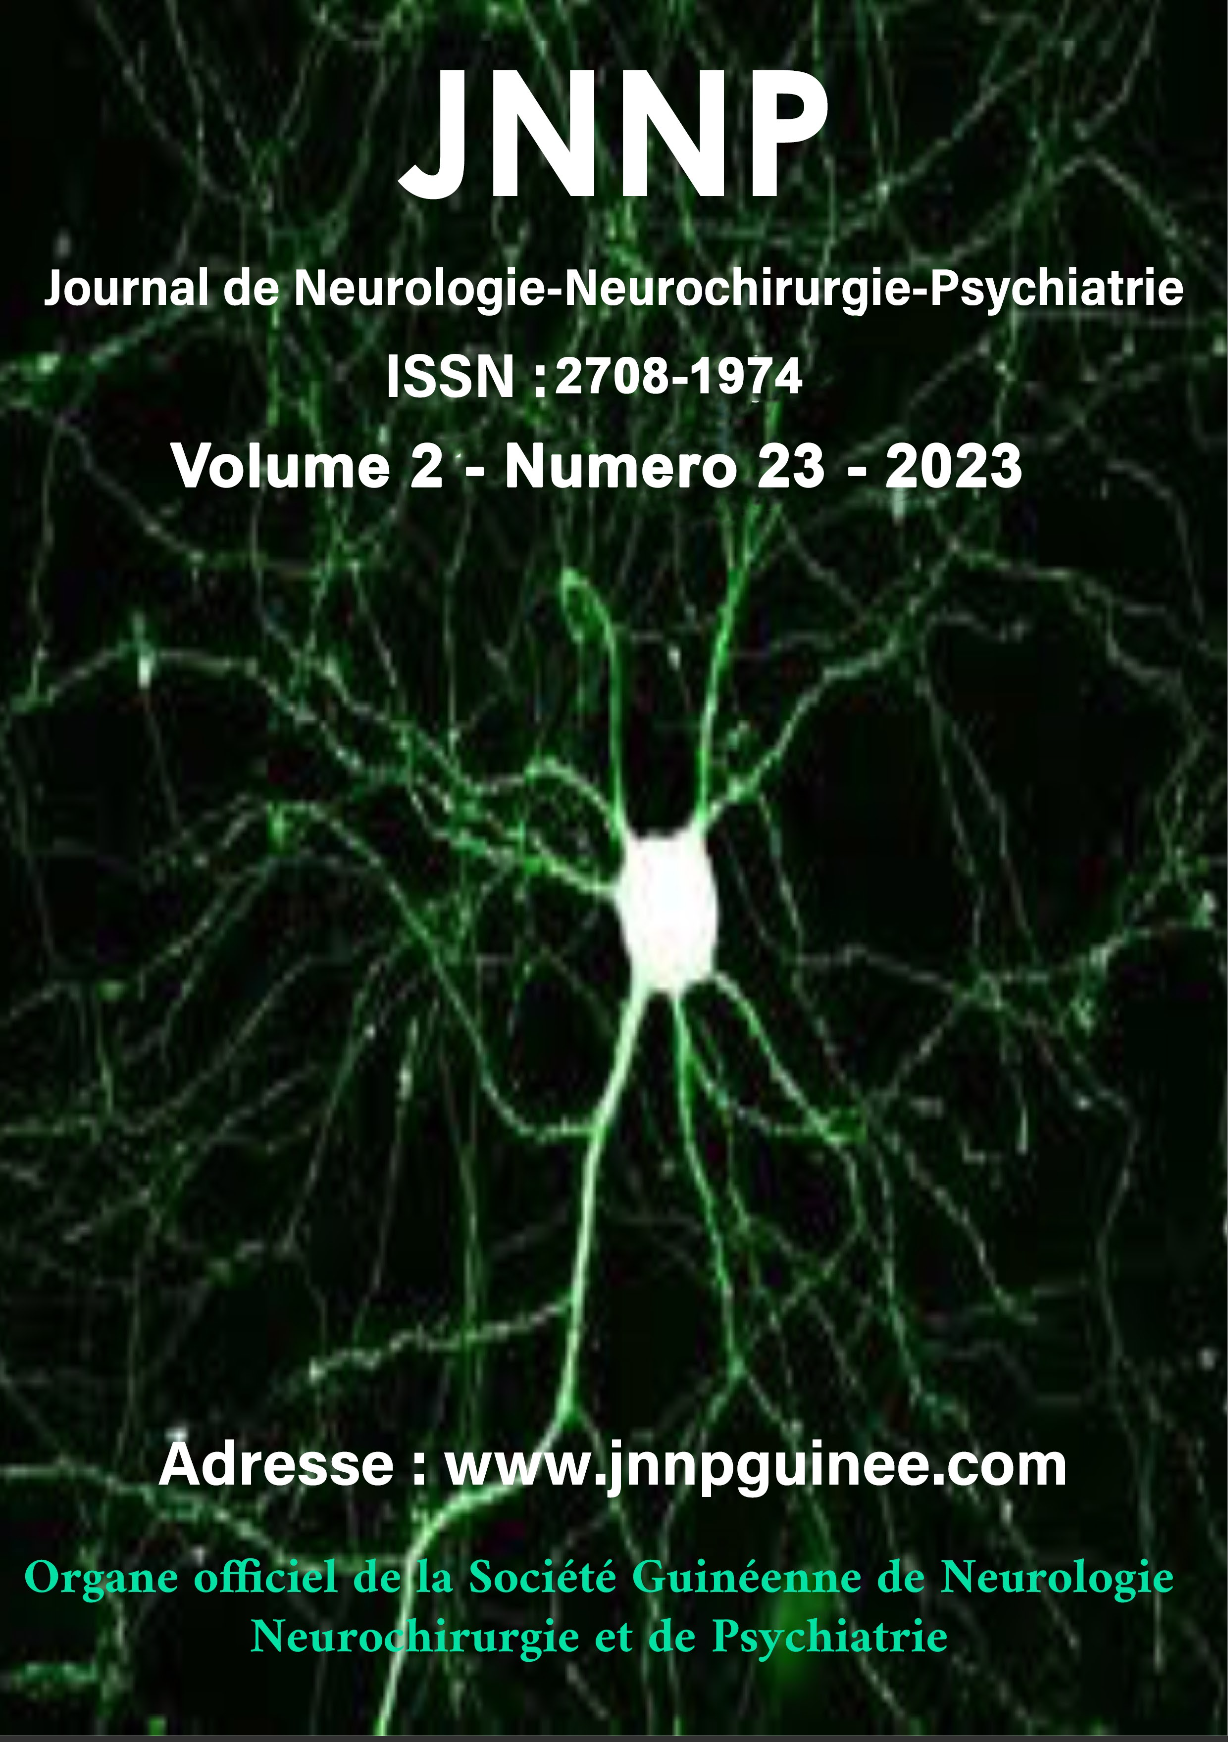 					Afficher Vol. 2 No 23 (2023): Journal de Neurologie Neurochirurgie et Psychiatrie de Guinée 2023
				